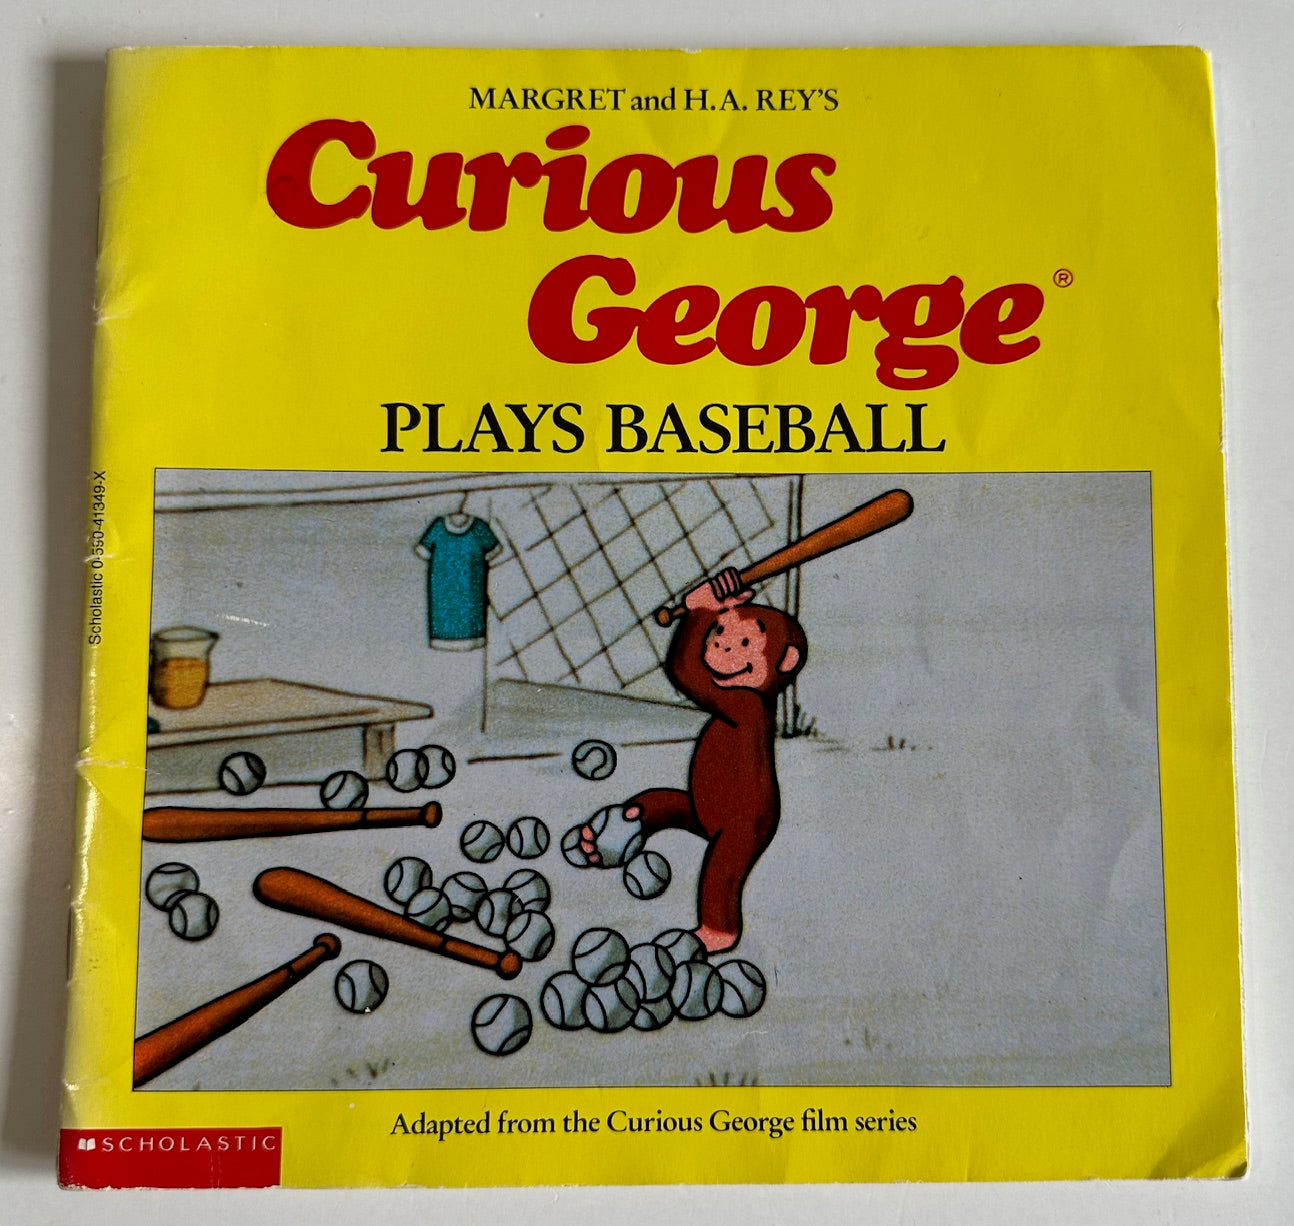 *Play* "Curious George Plays Baseball"